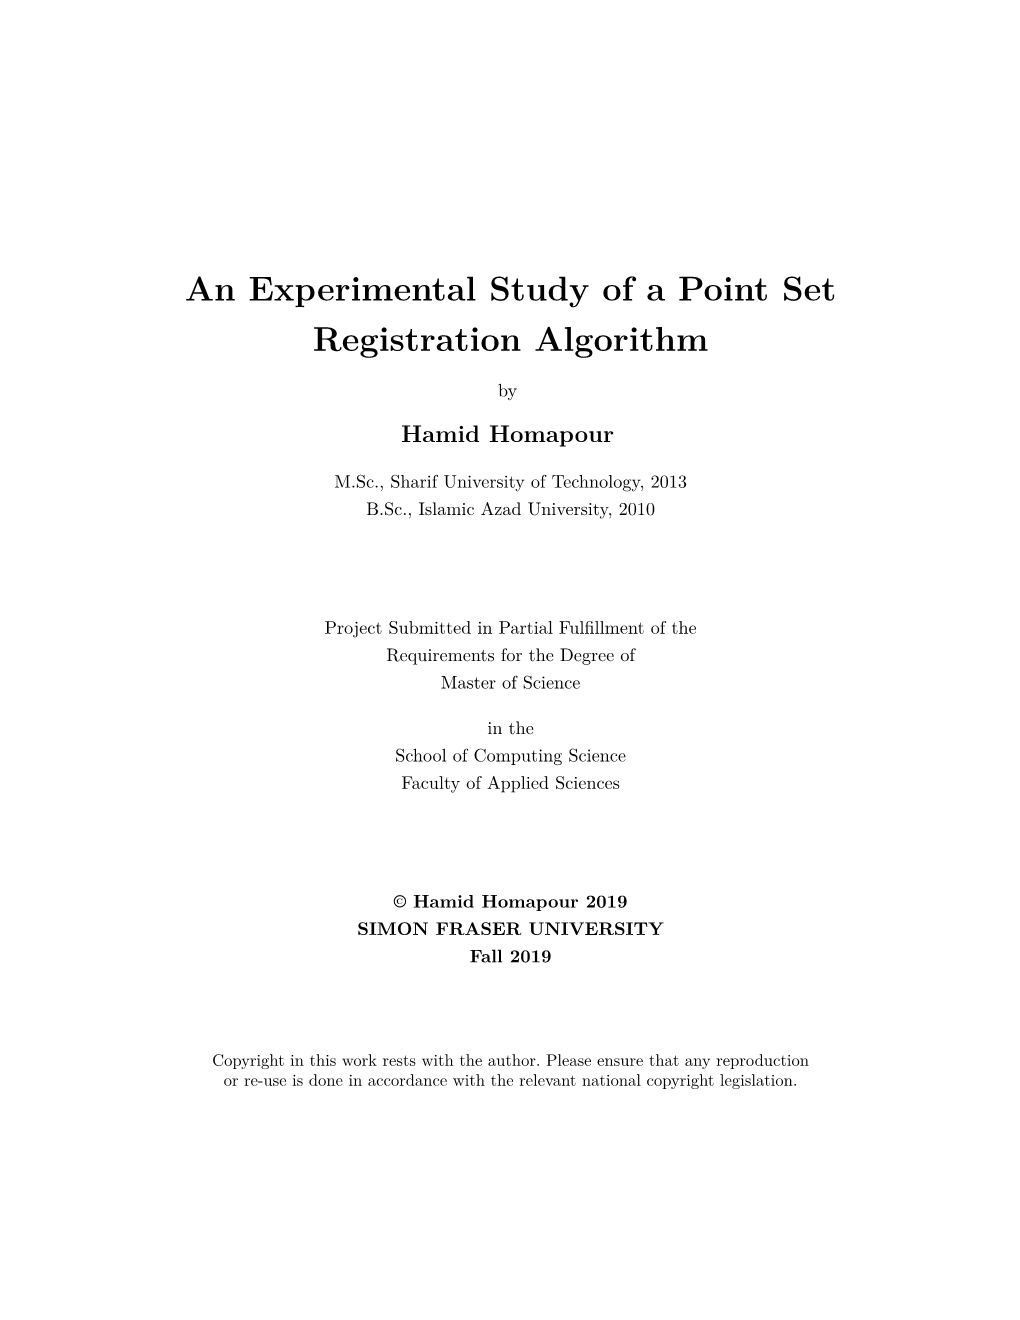 An Experimental Study of a Point Set Registration Algorithm